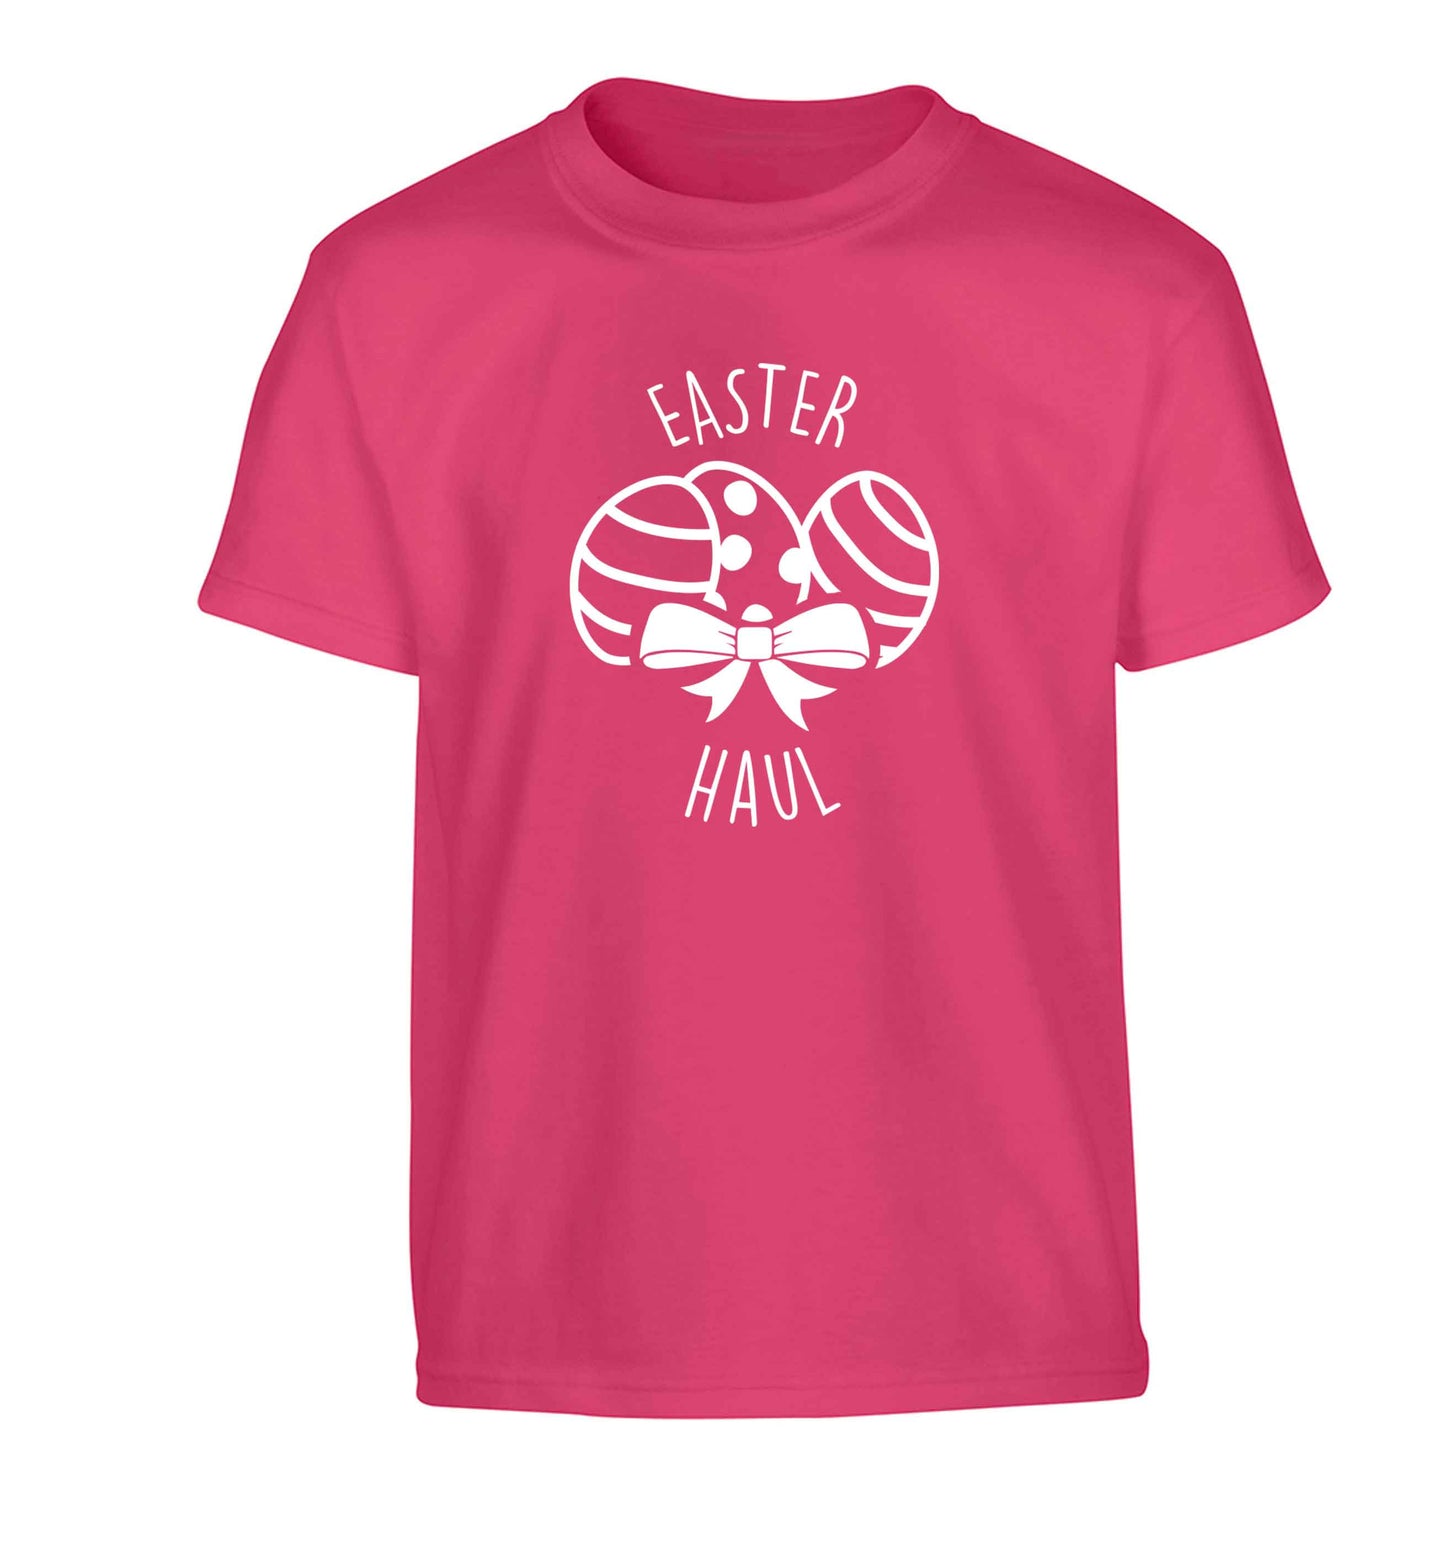 Easter haul Children's pink Tshirt 12-13 Years